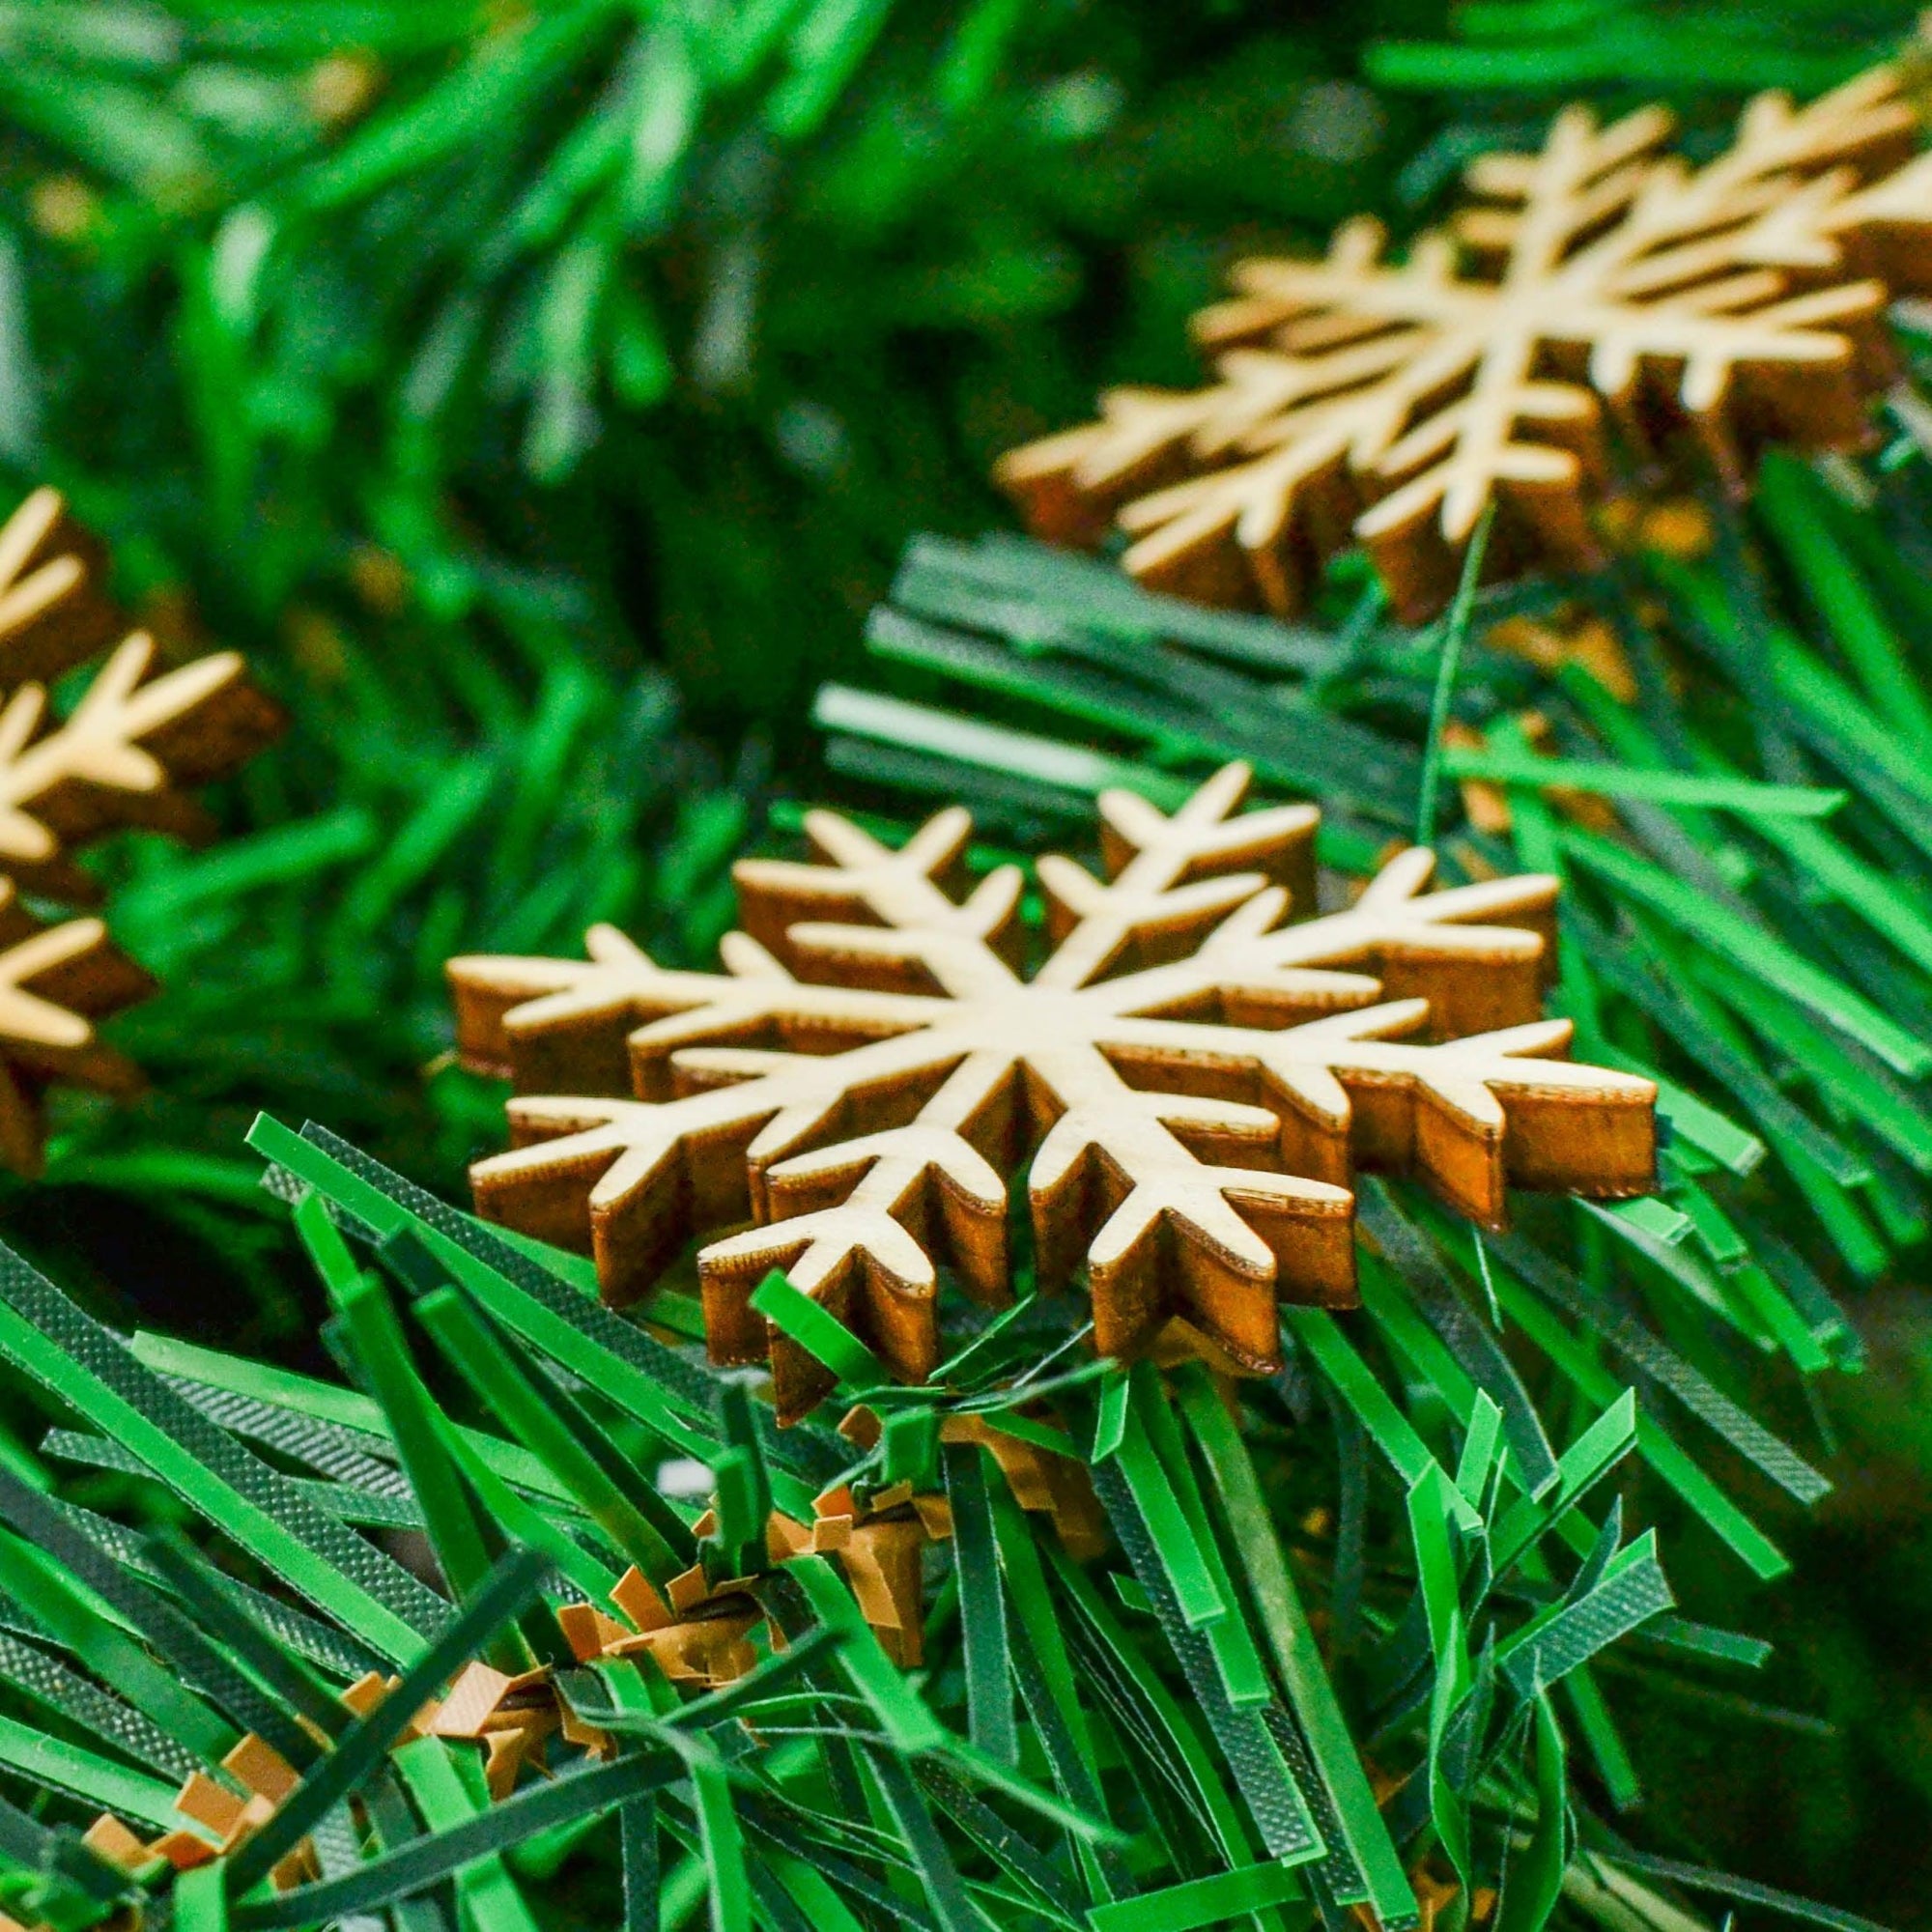 Snowflake Wooden Blank Cutout - Knot Creatives